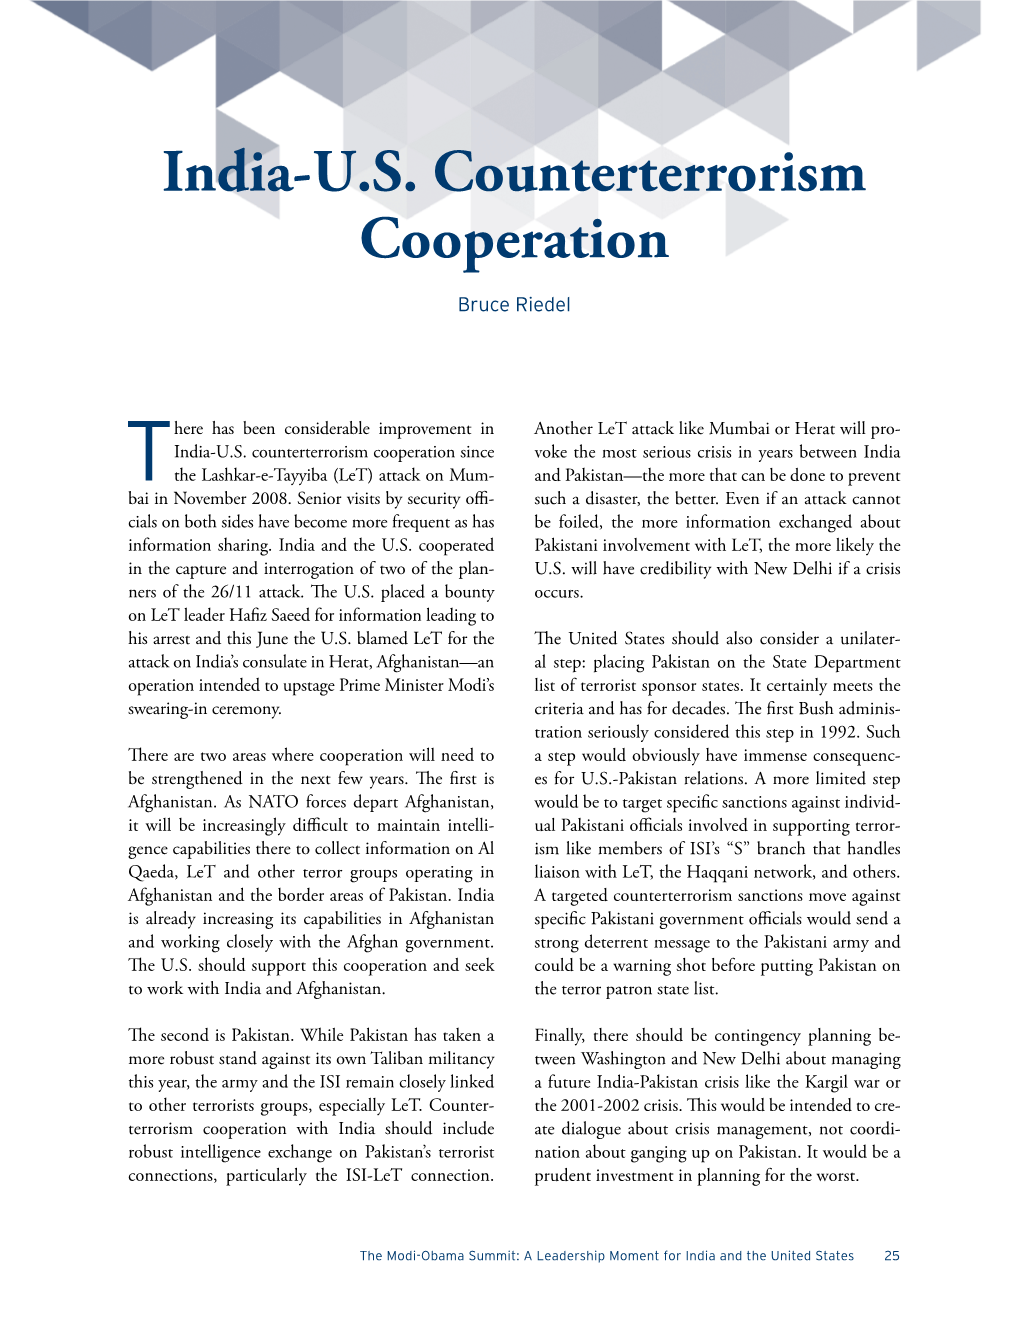 India-U.S. Counterterrorism Cooperation Bruce Riedel